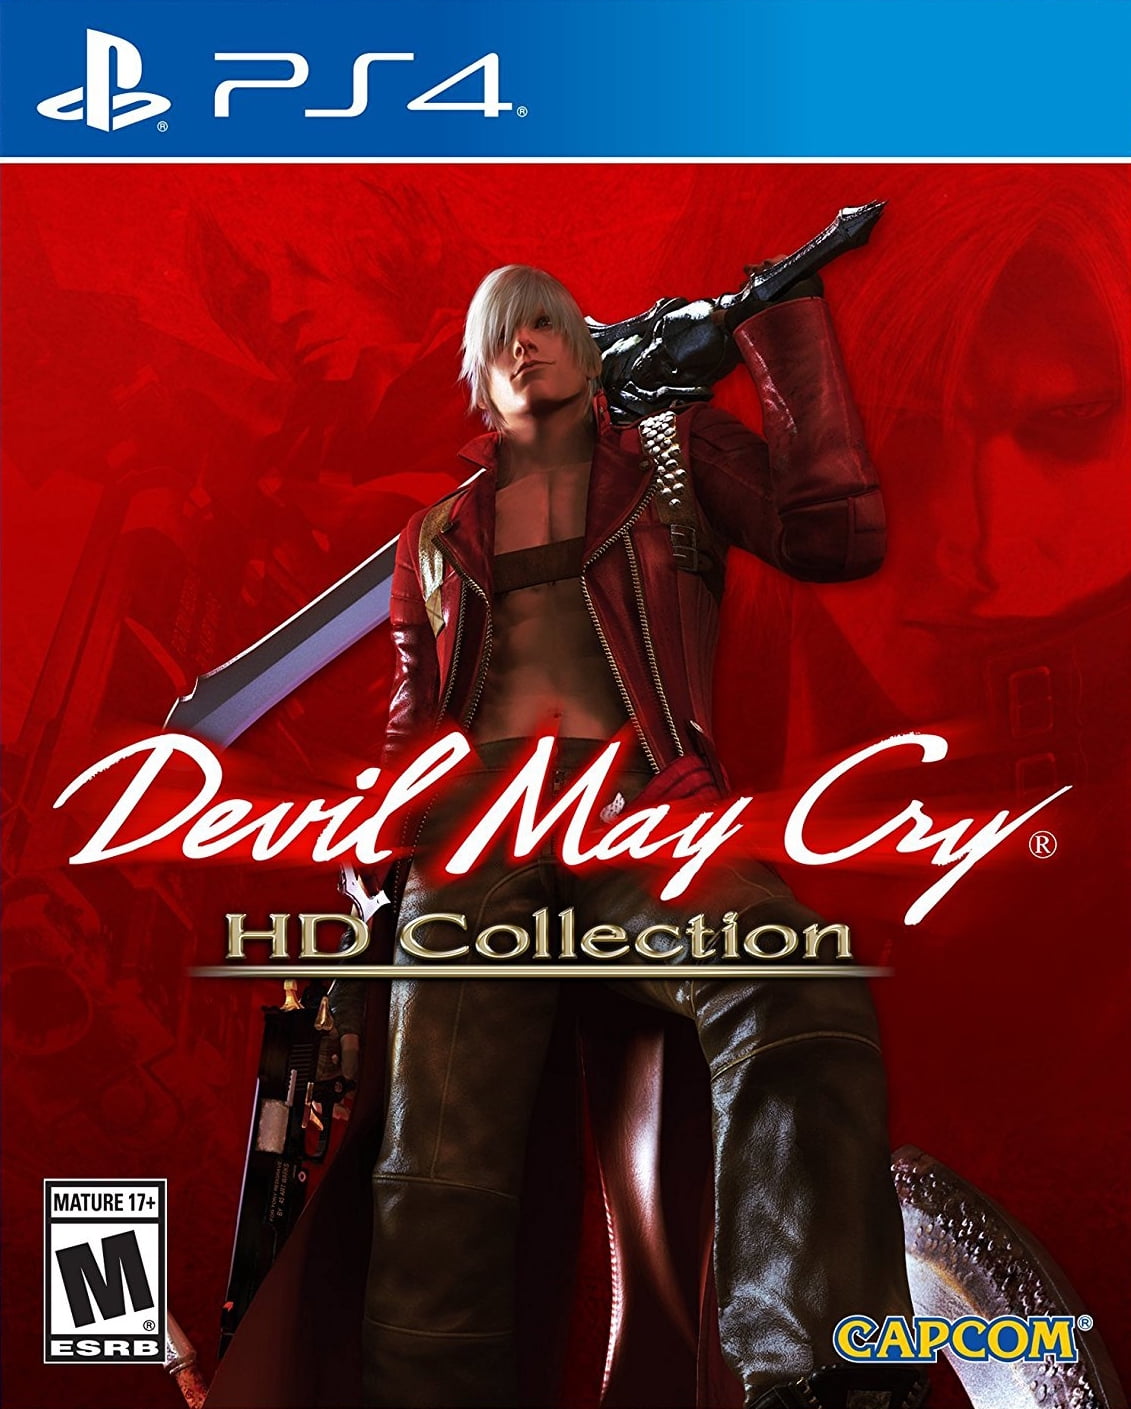 Udflugt segment Skur Devil May Cry HD Collection, Capcom, PlayStation 4, [Physical],  013388560516 - Walmart.com